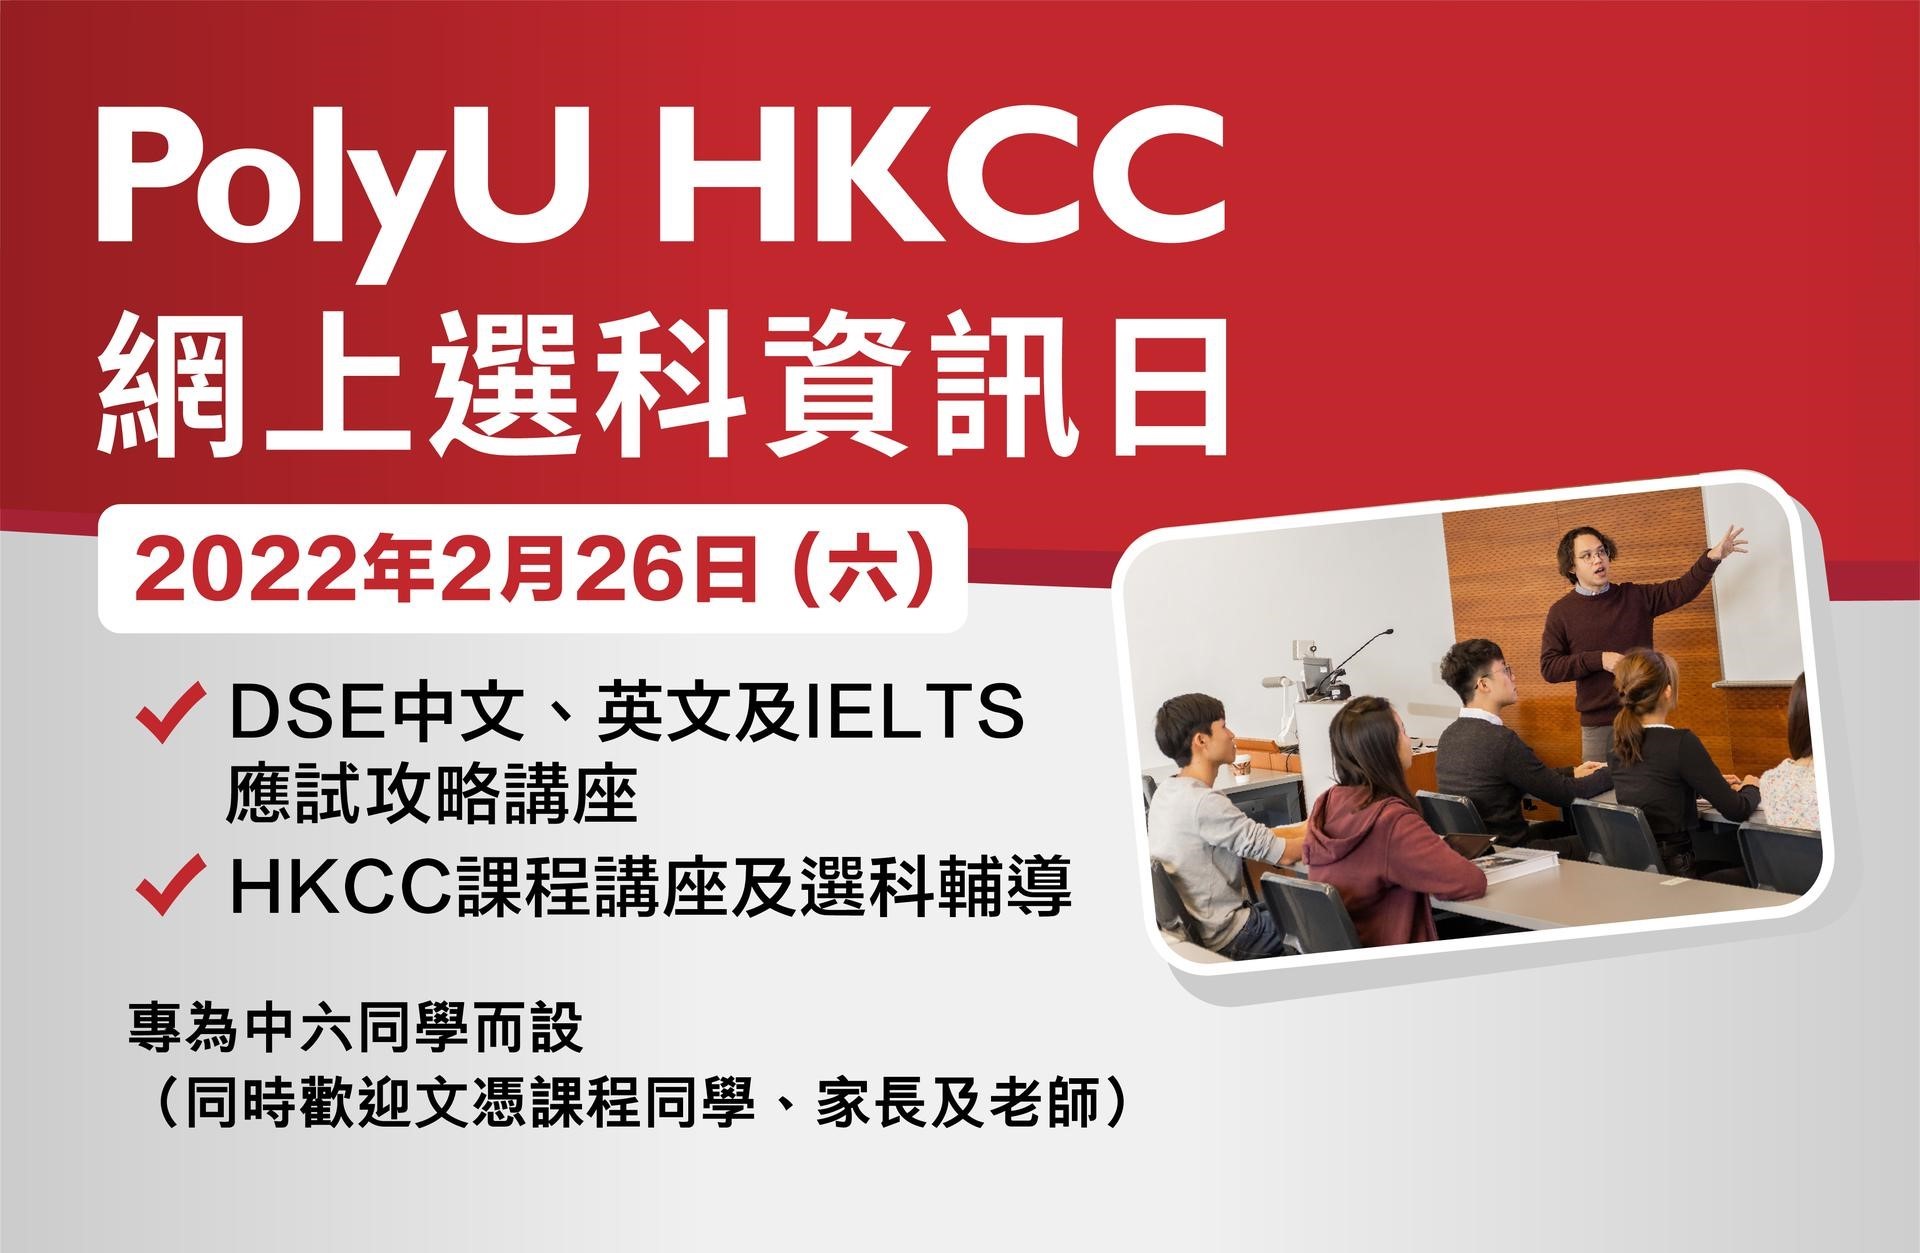 PolyU HKCC Online Information Day